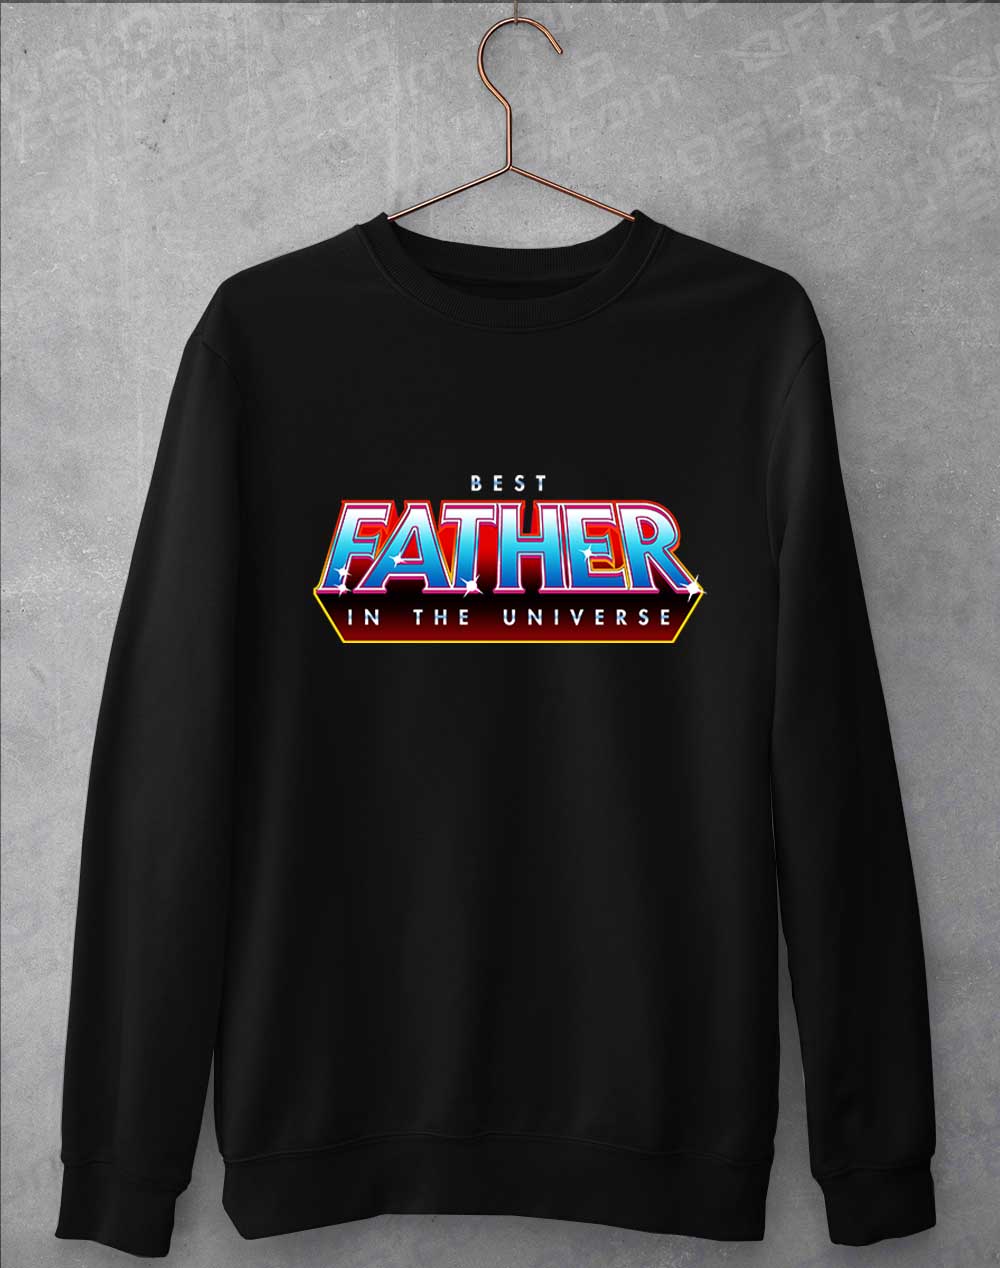 Jet Black - Best Father in the Universe Sweatshirt